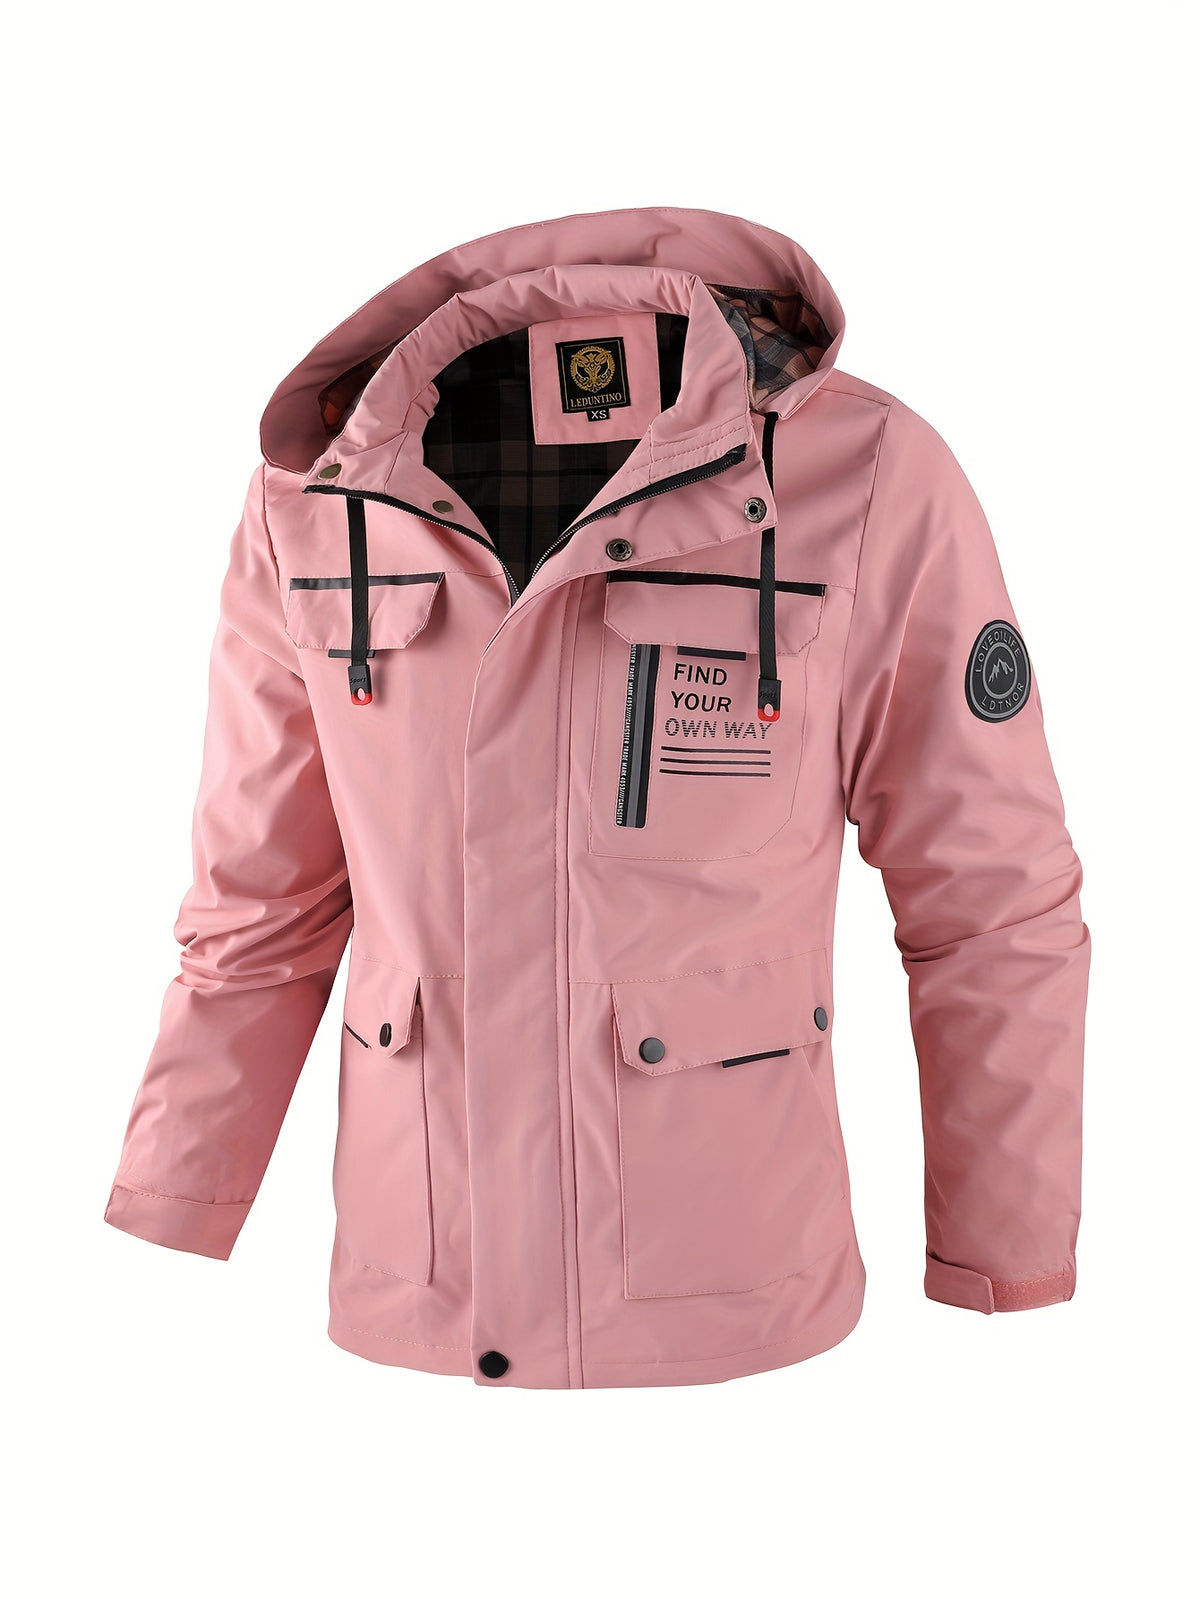 Men's Fashion Casual Windbreaker Bomber Jacket, Spring Outdoor Waterproof Sports Jacket Cykapu